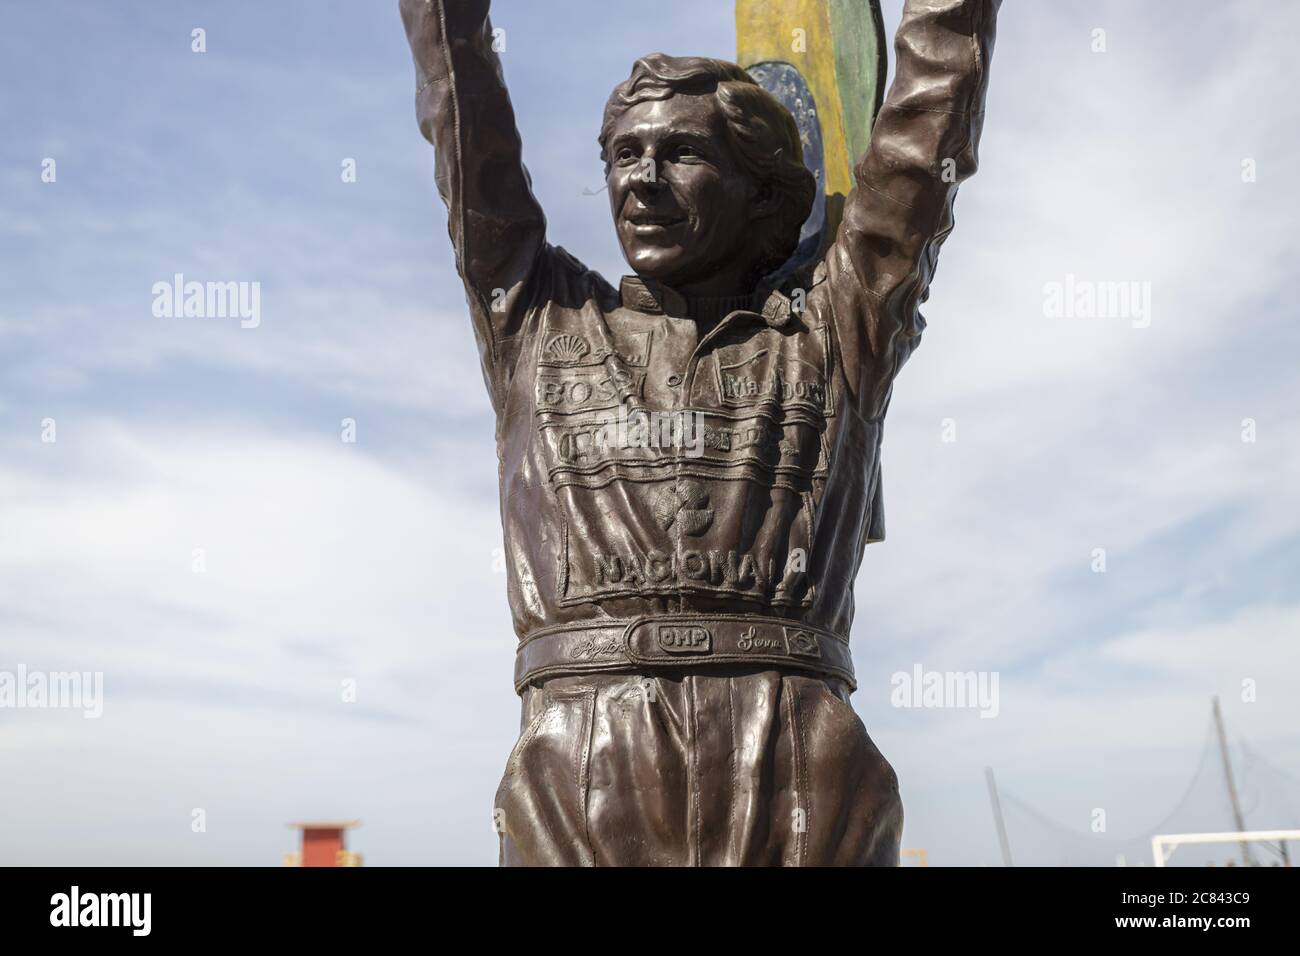 RIO DE JANEIRO, BRAZIL - Jul 12, 2020: Bronze statue of Ayrton Senna holding a Brazilian flag up high with his racing suite full of company sponsor lo Stock Photo